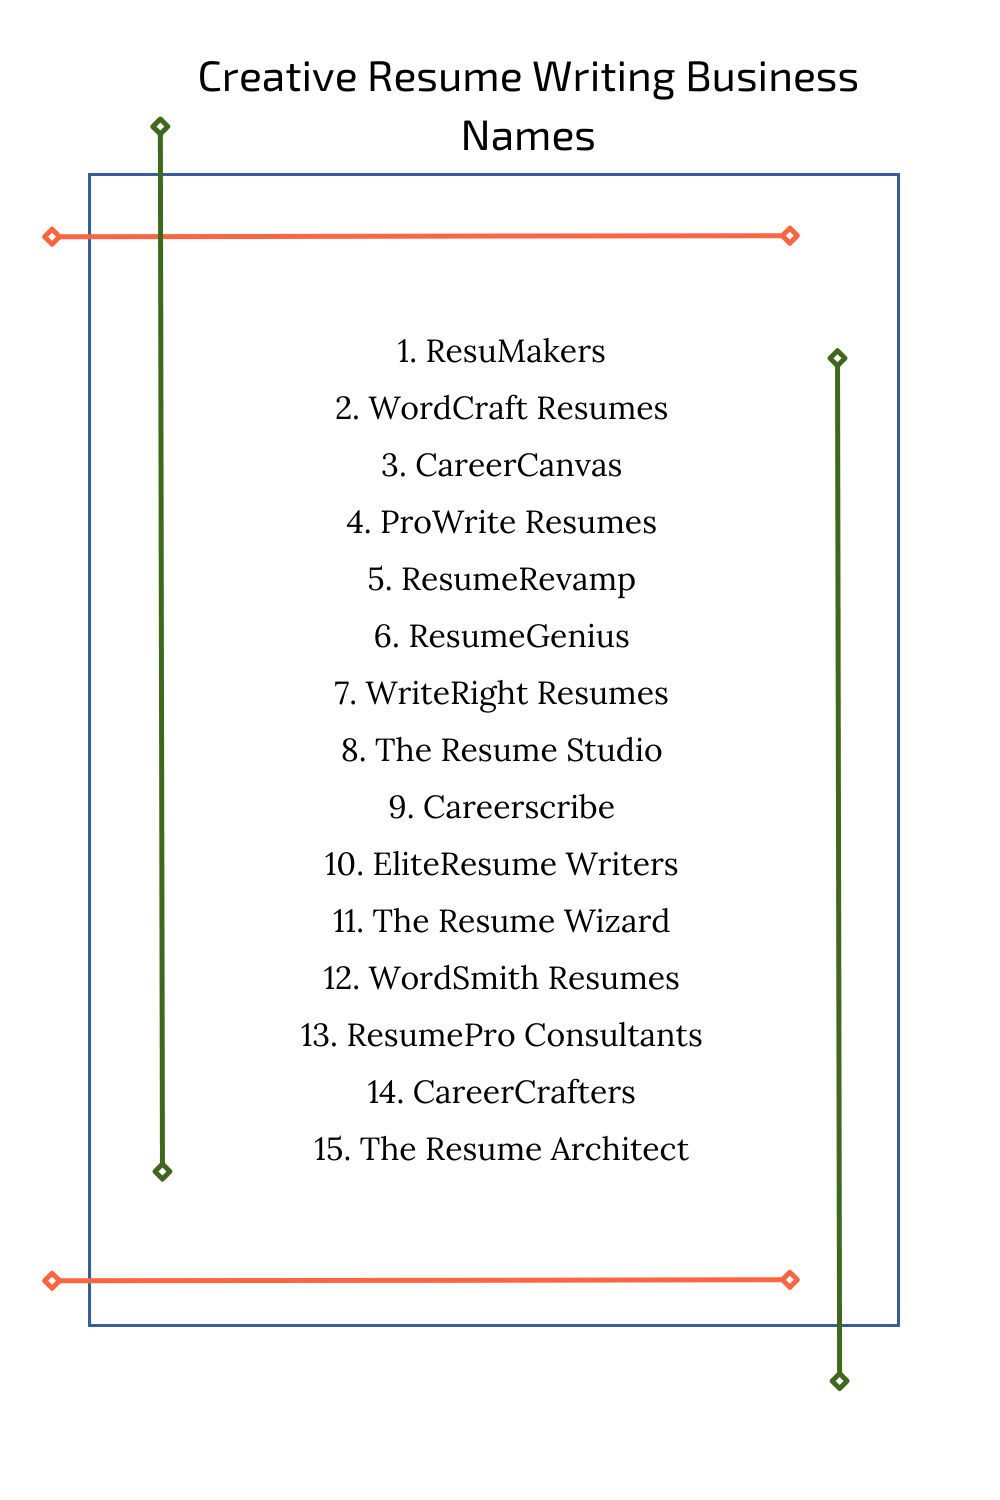 Creative Resume Writing Business Names